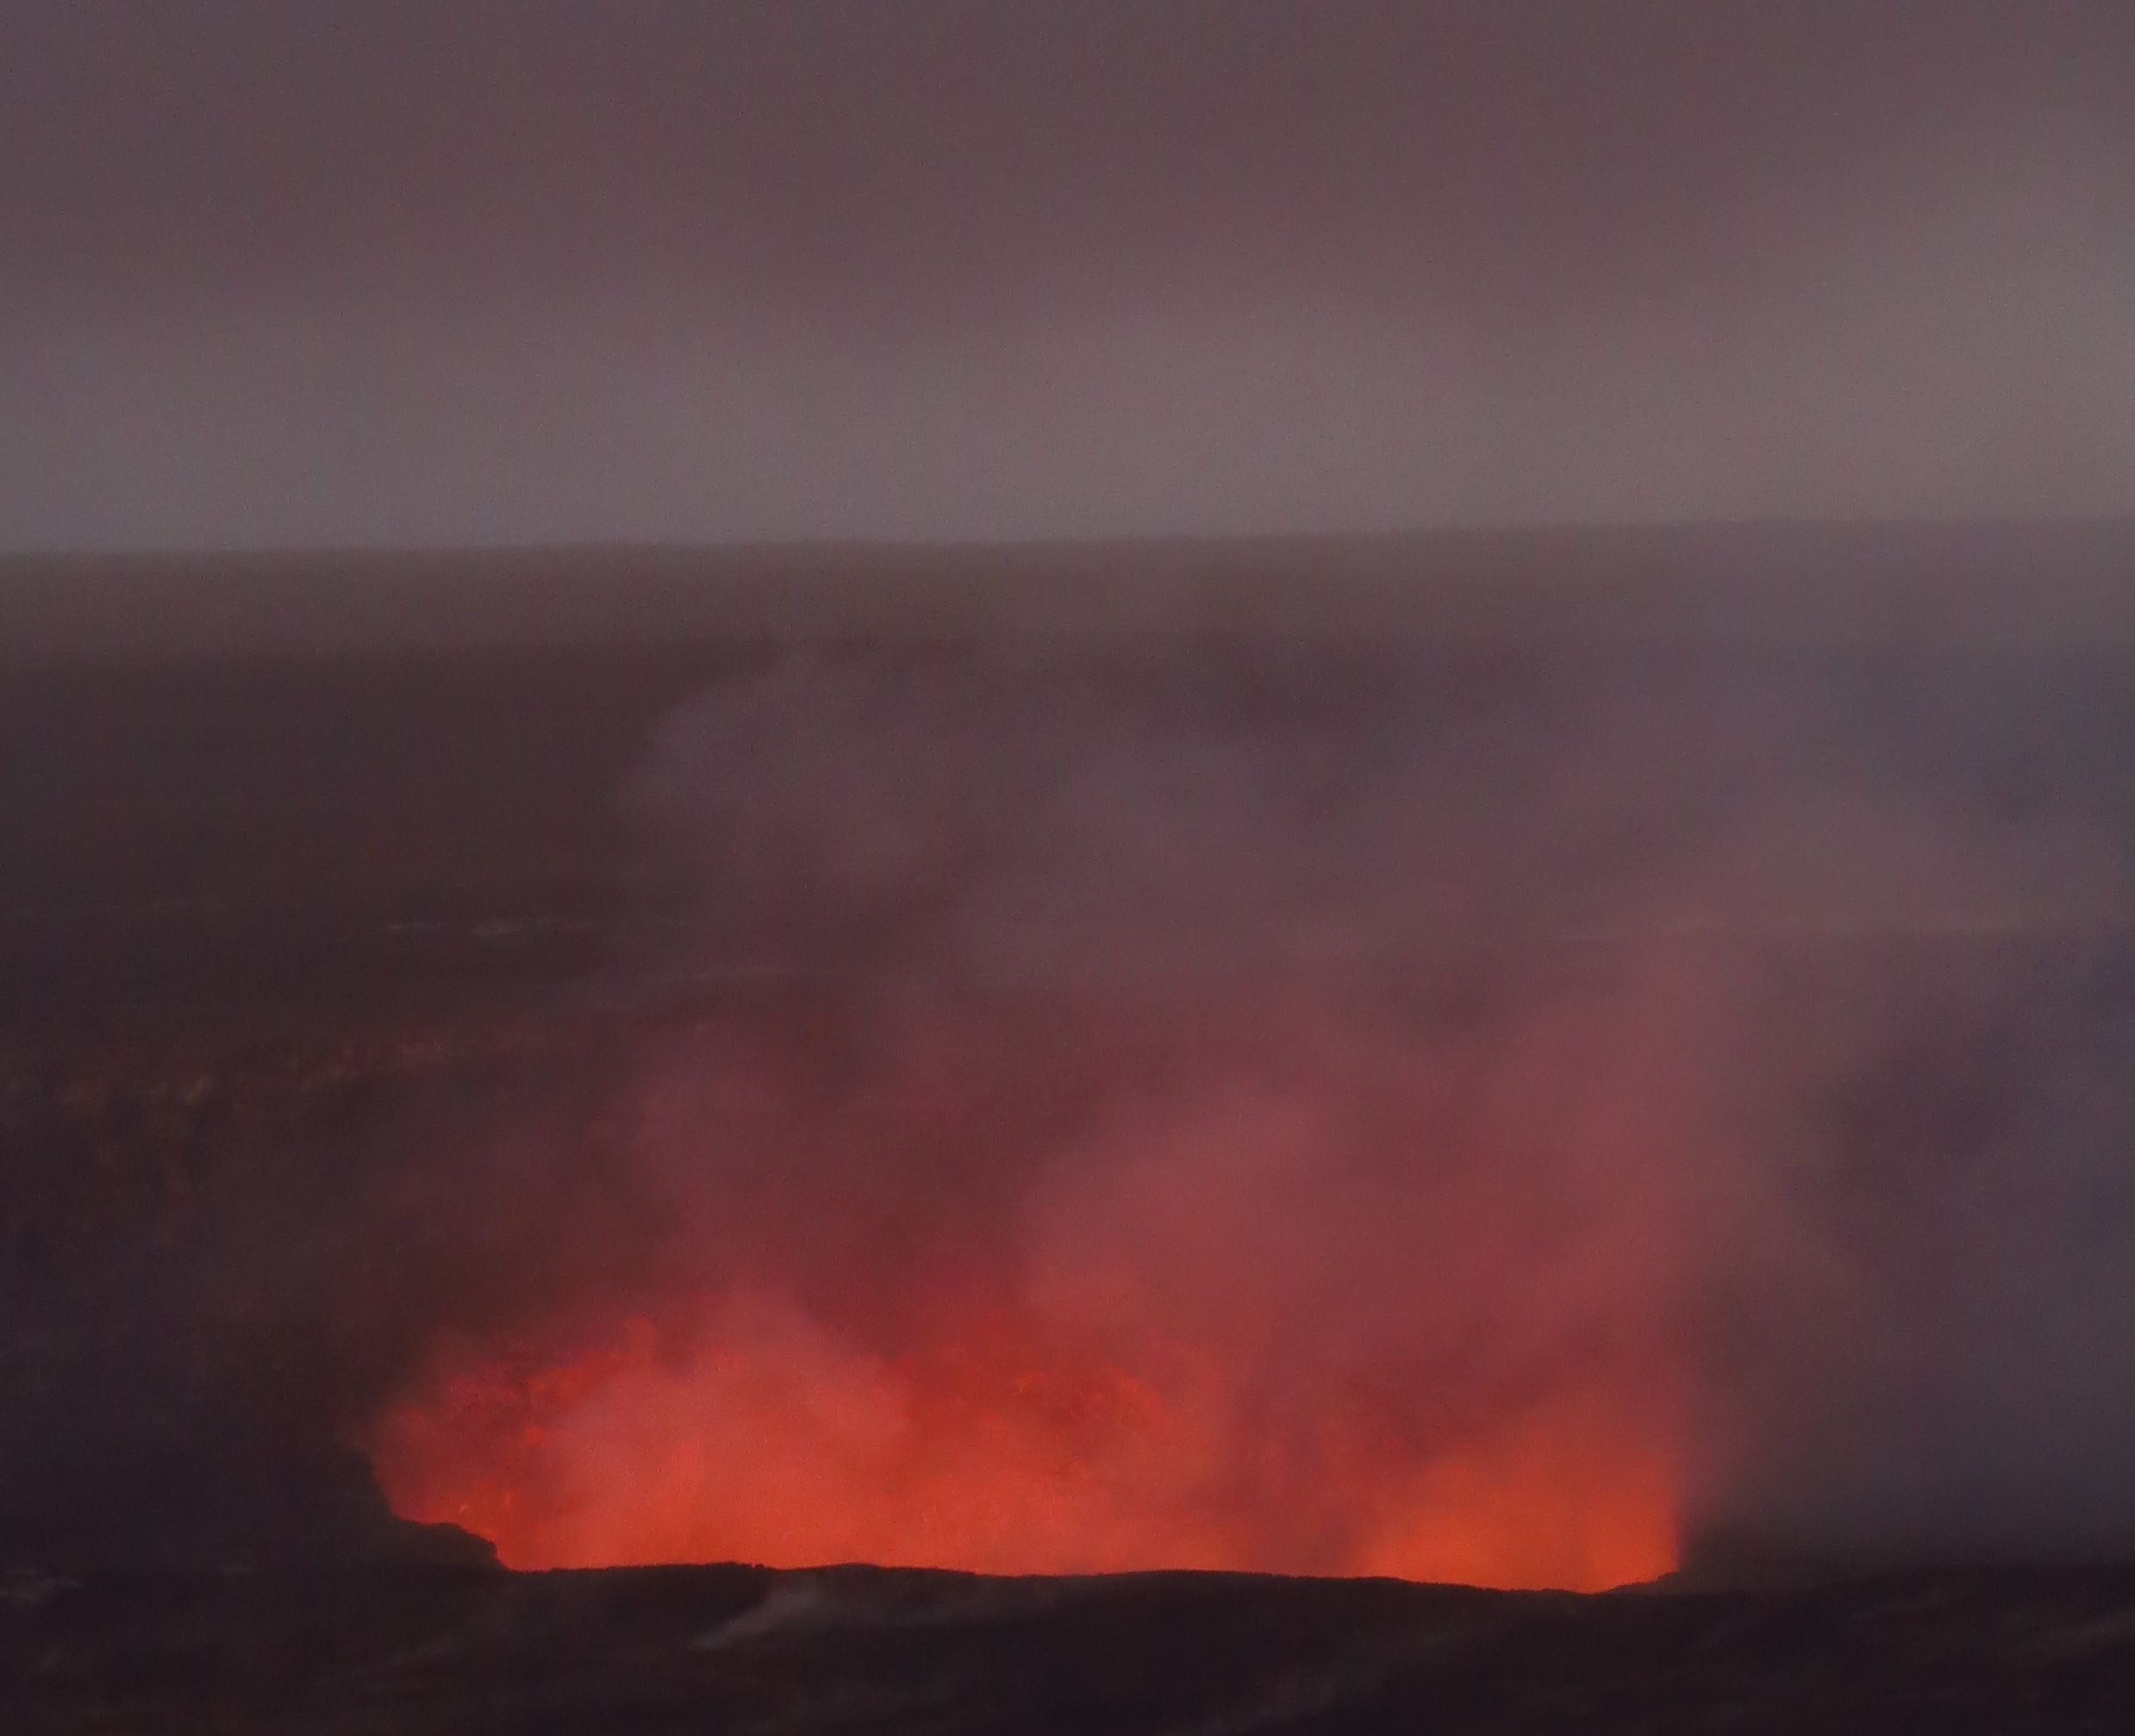   Halema'uma'u Crater, Hawaii Volcanoes National Park  